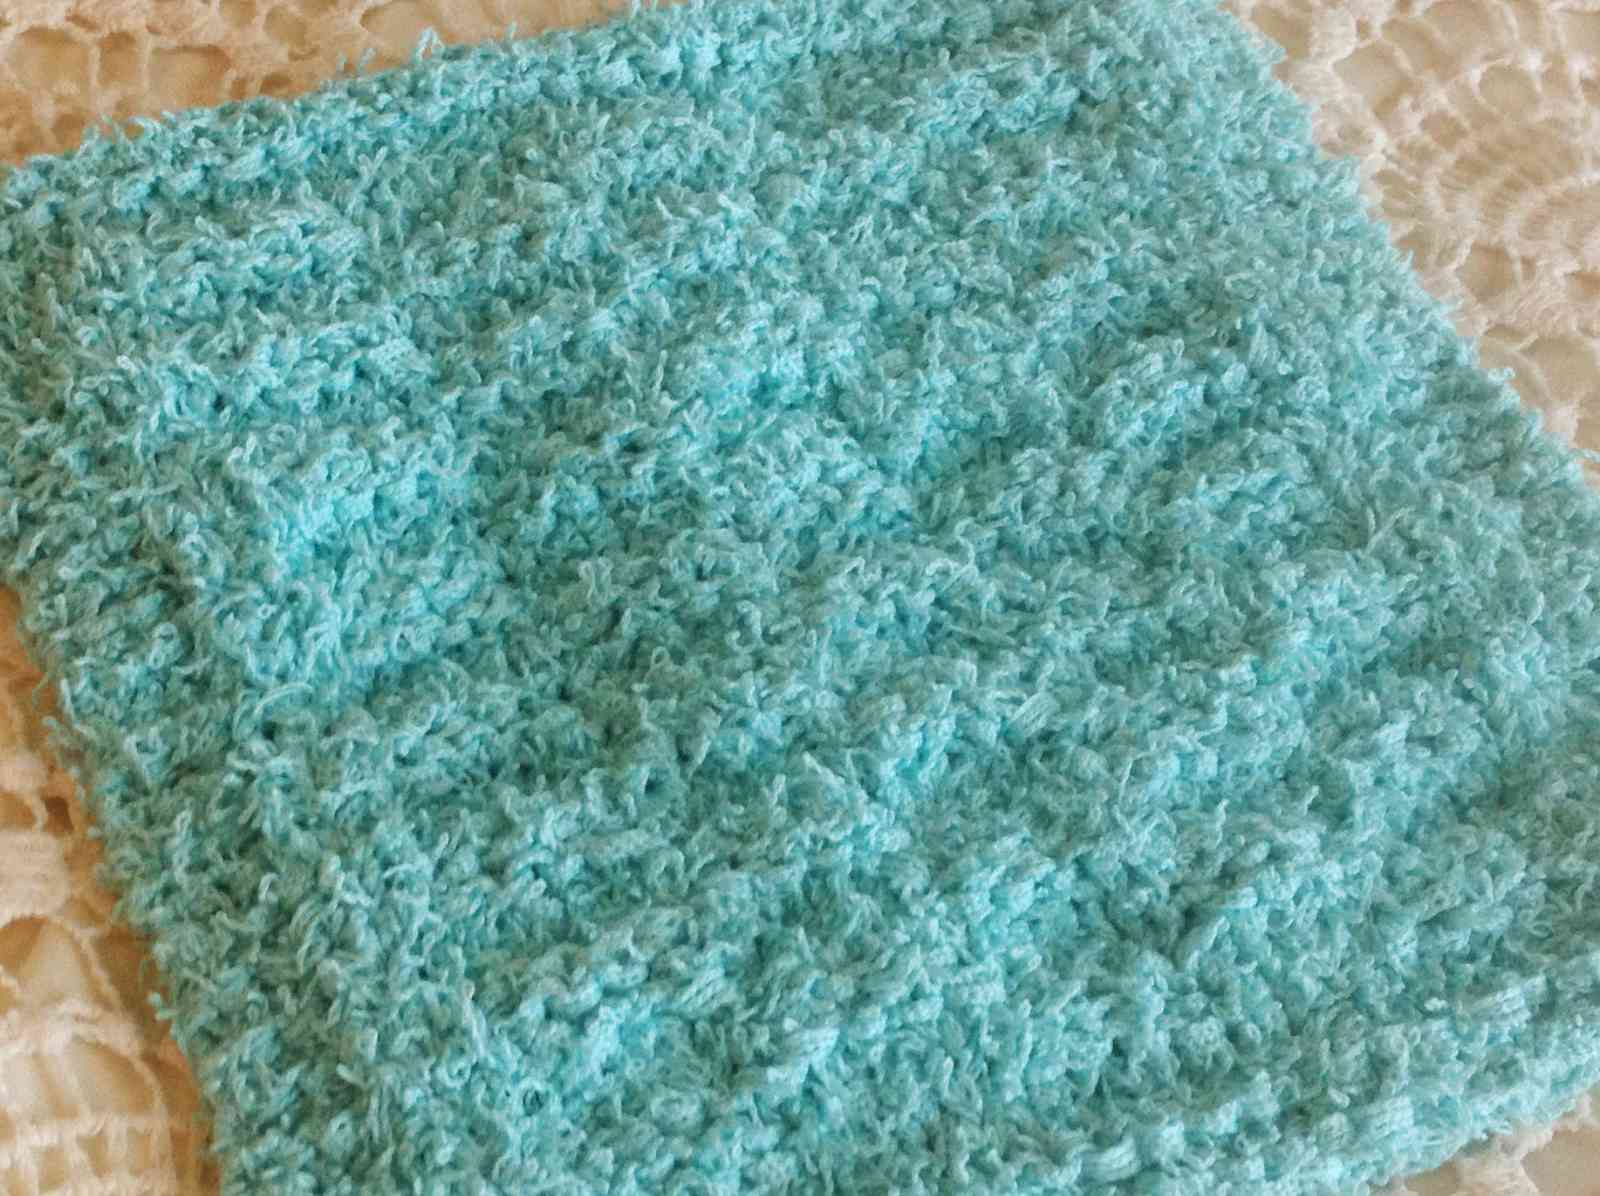 Cotton Dishcloths Knitting Patterns 10 Knit Dishcloth Patterns For Beginners